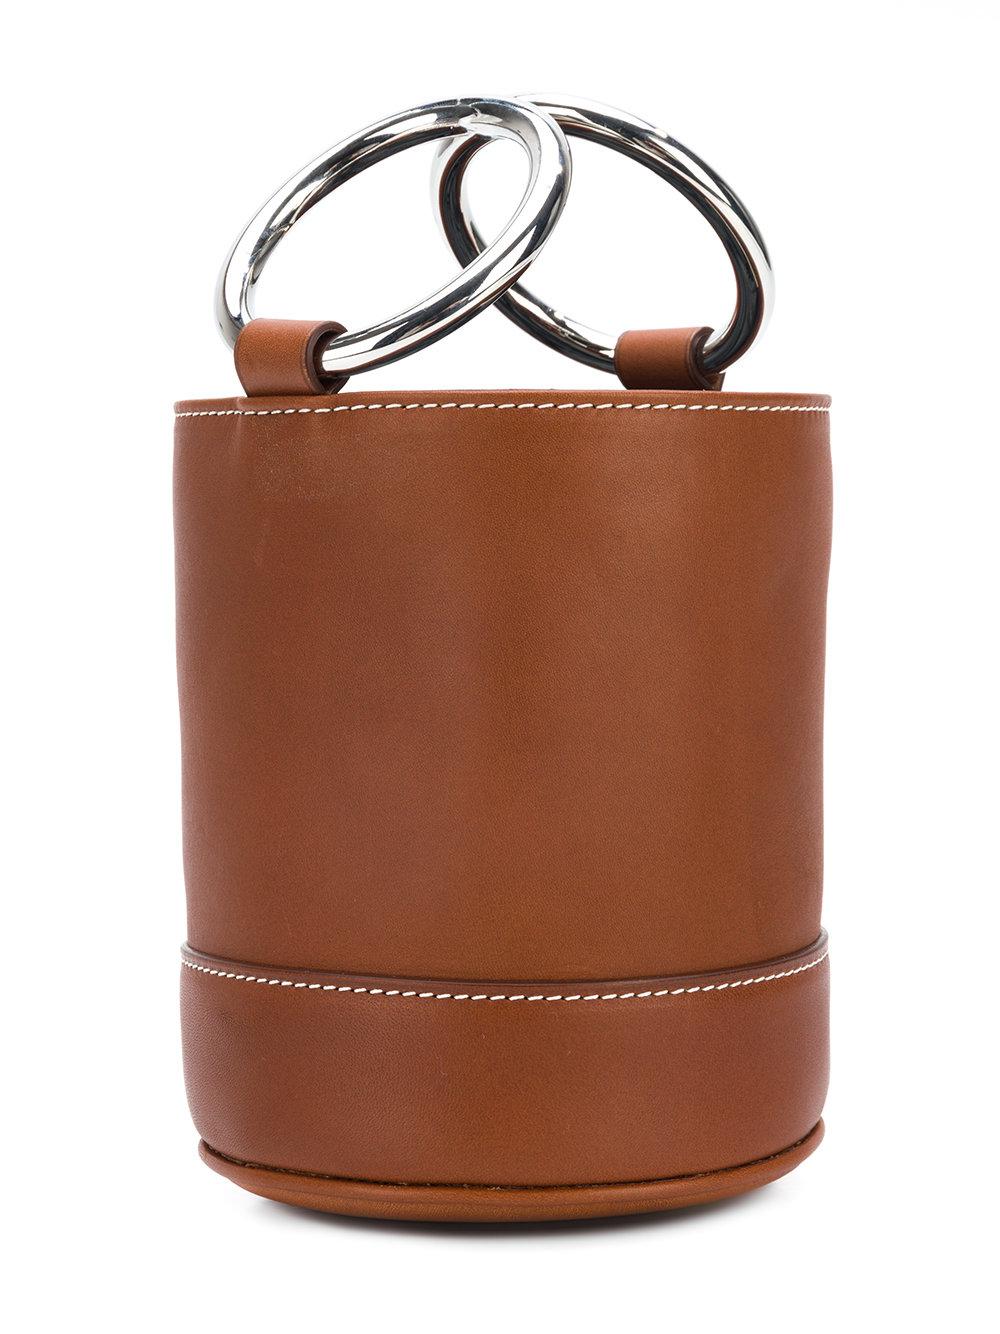 Simon Miller Leather Bonsai Bag in Brown - Lyst